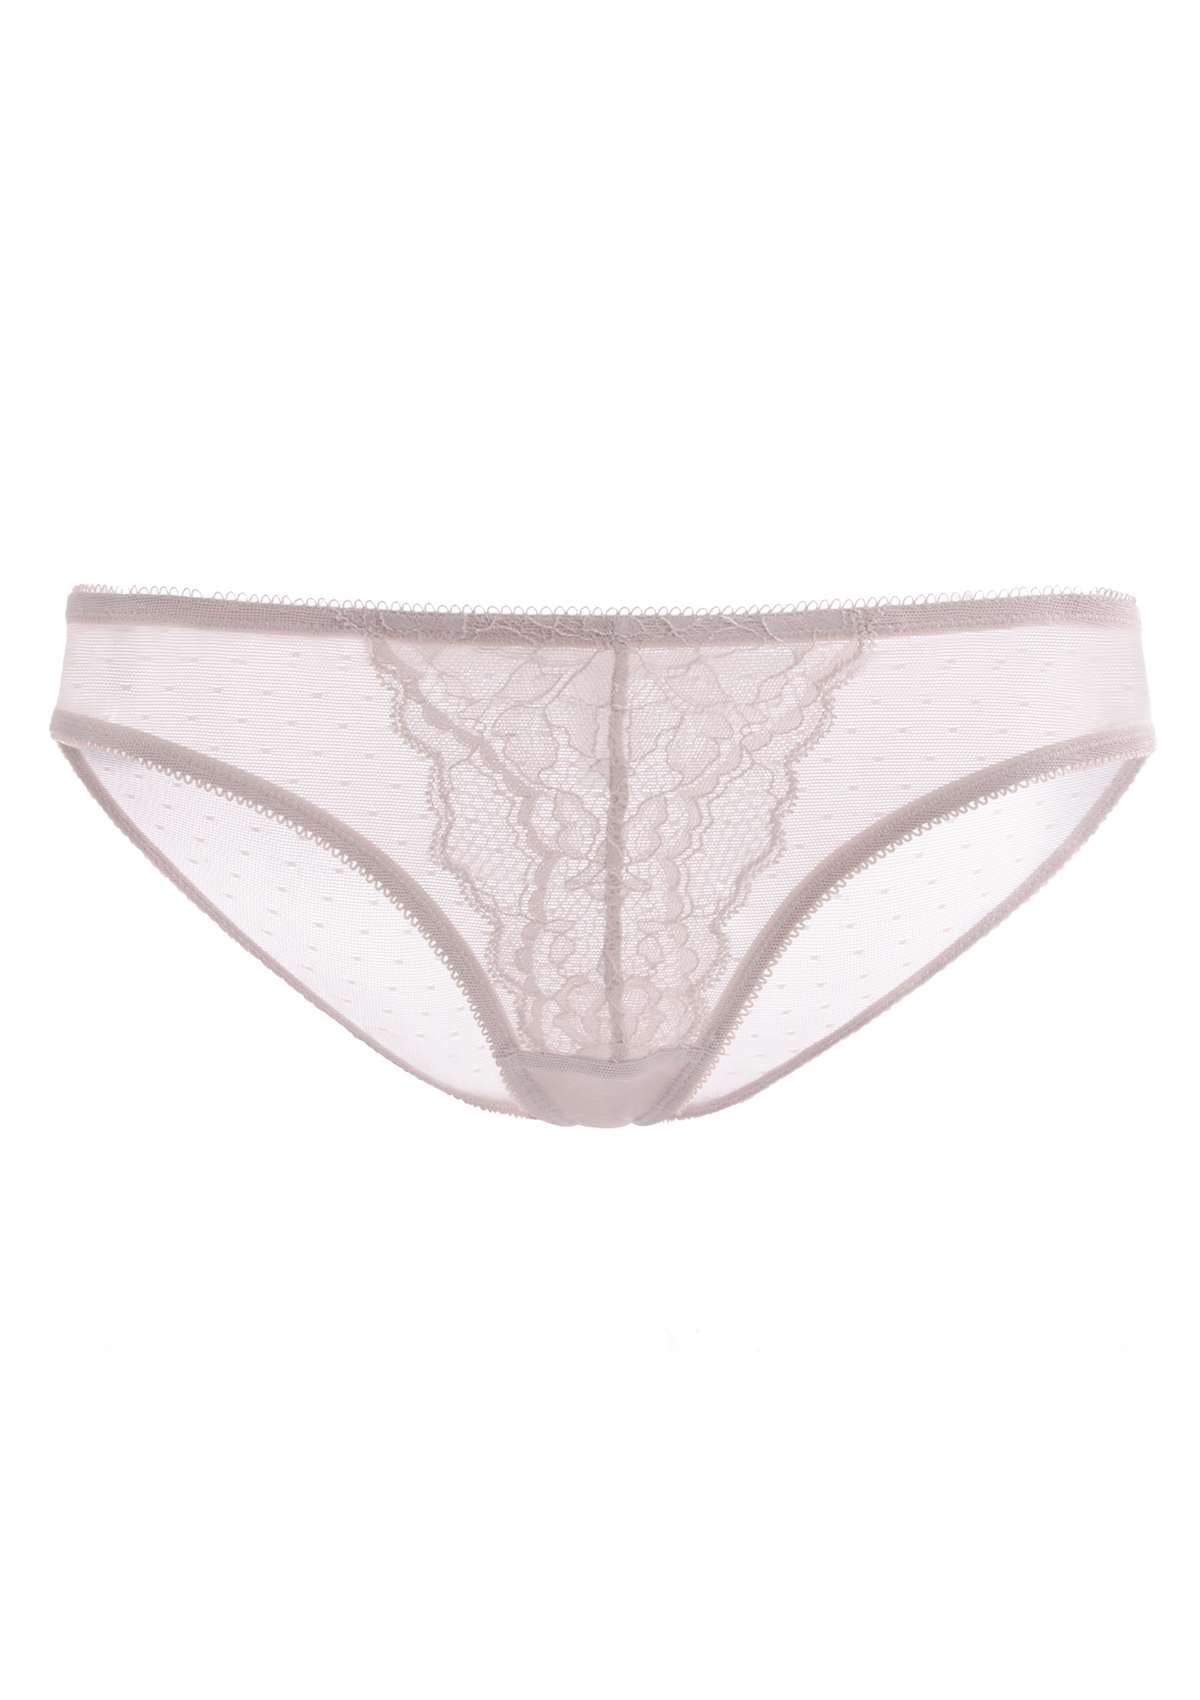 HSIA Enchante Sheer Lace Mesh Mid Rise Bikini Underwear - L / Dark Pink